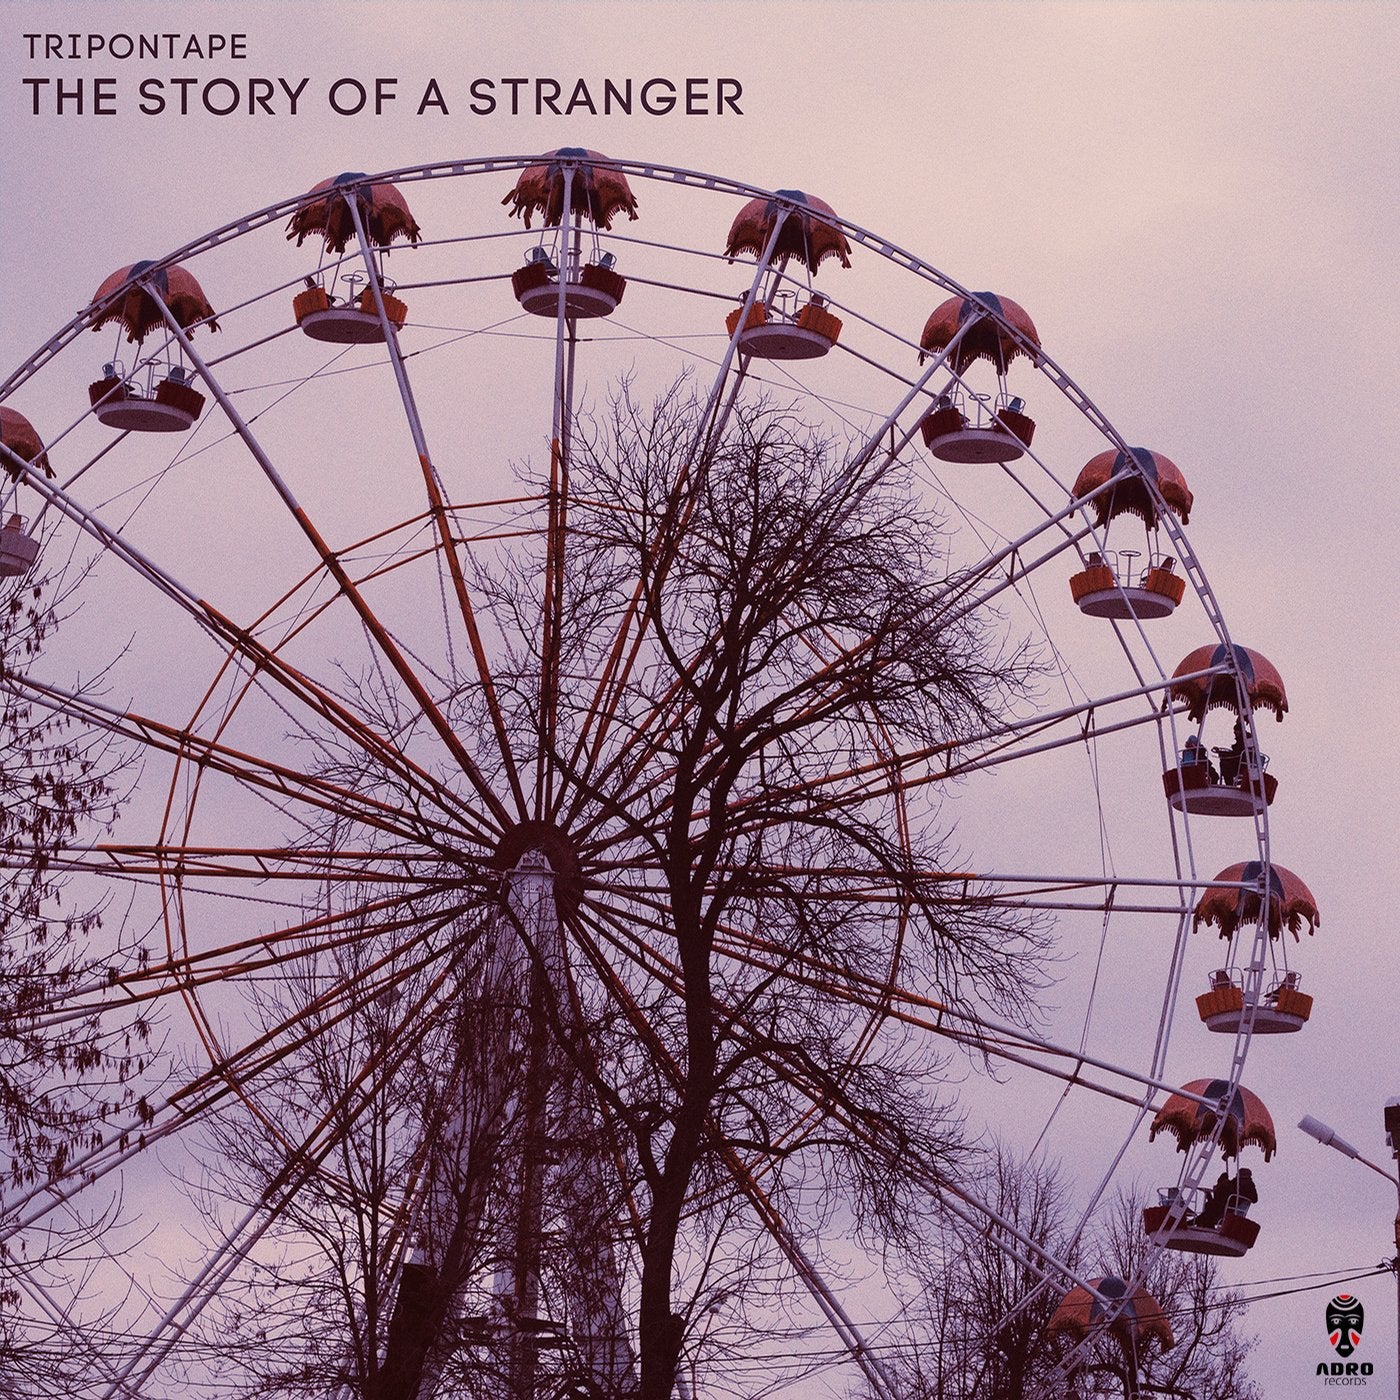 The Story of a Stranger